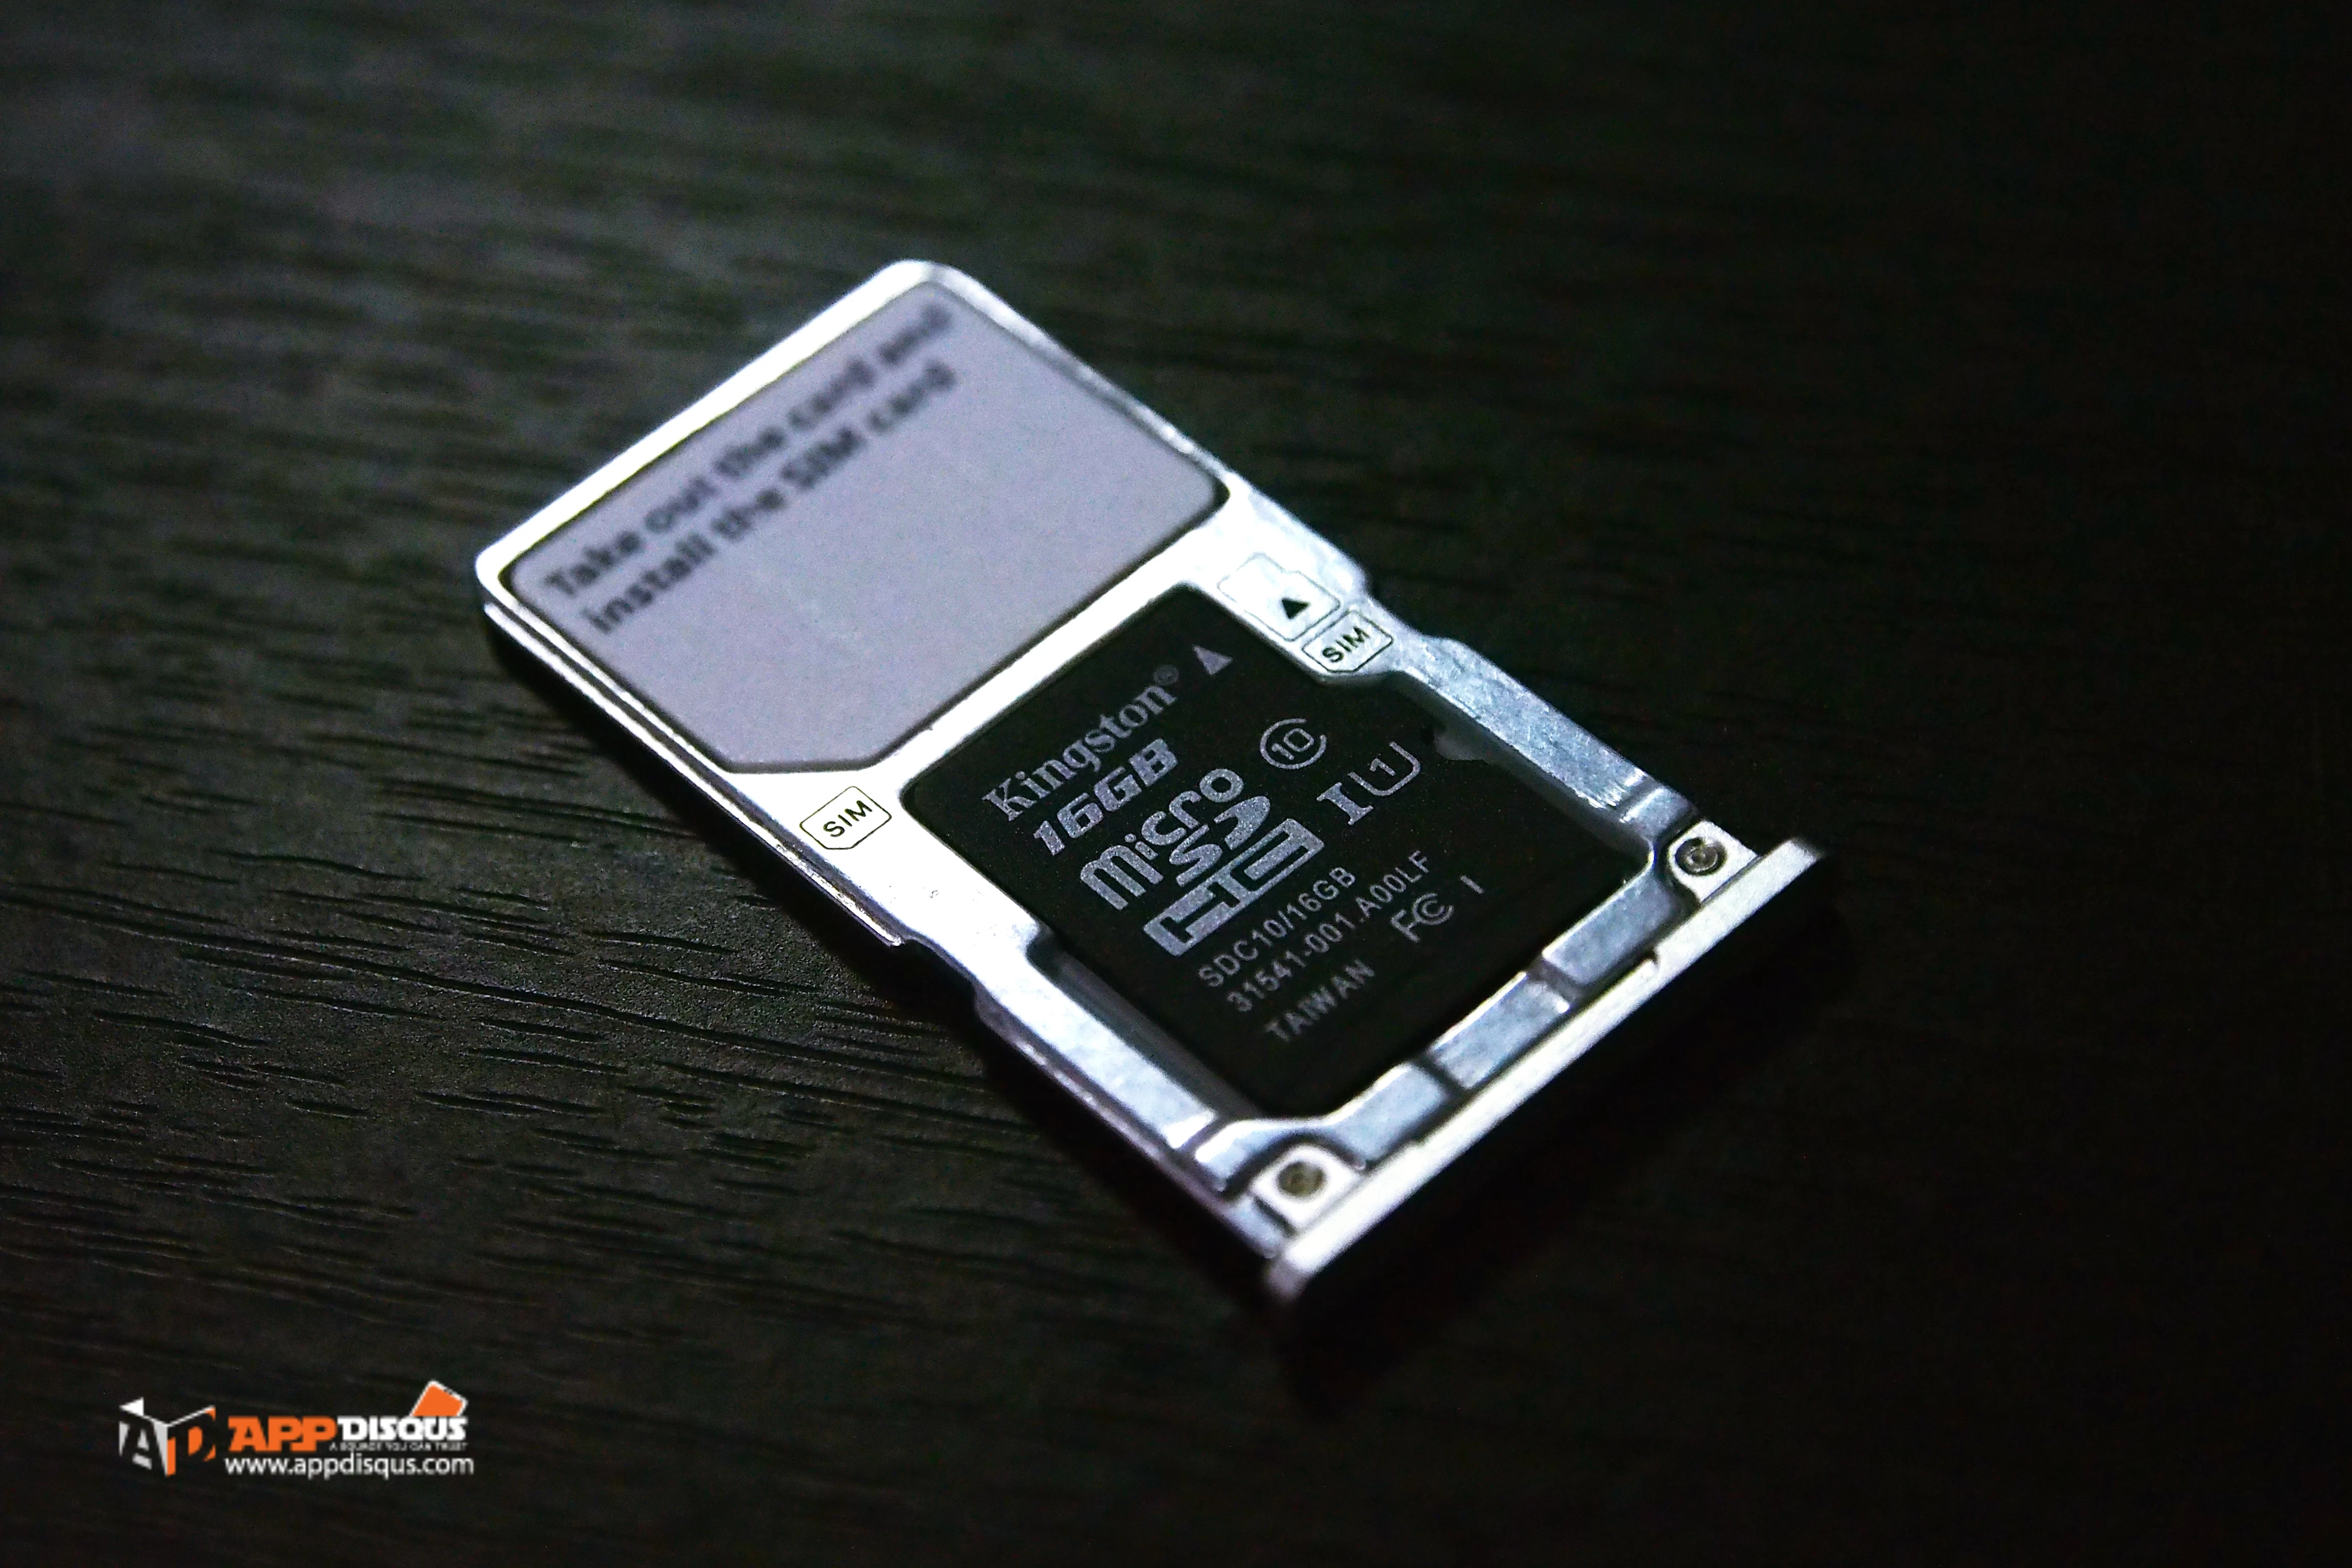 Samsung Galaxy A5 021 | Micro Sd card | มาเข้าใจรูปแบบสองซิมการ์ดใหม่ในมือถือ Android สล็อตใส่ซิมที่เลือกใส่ Micro SD card แทนได้เพื่อเพิ่มหน่วยความจำ